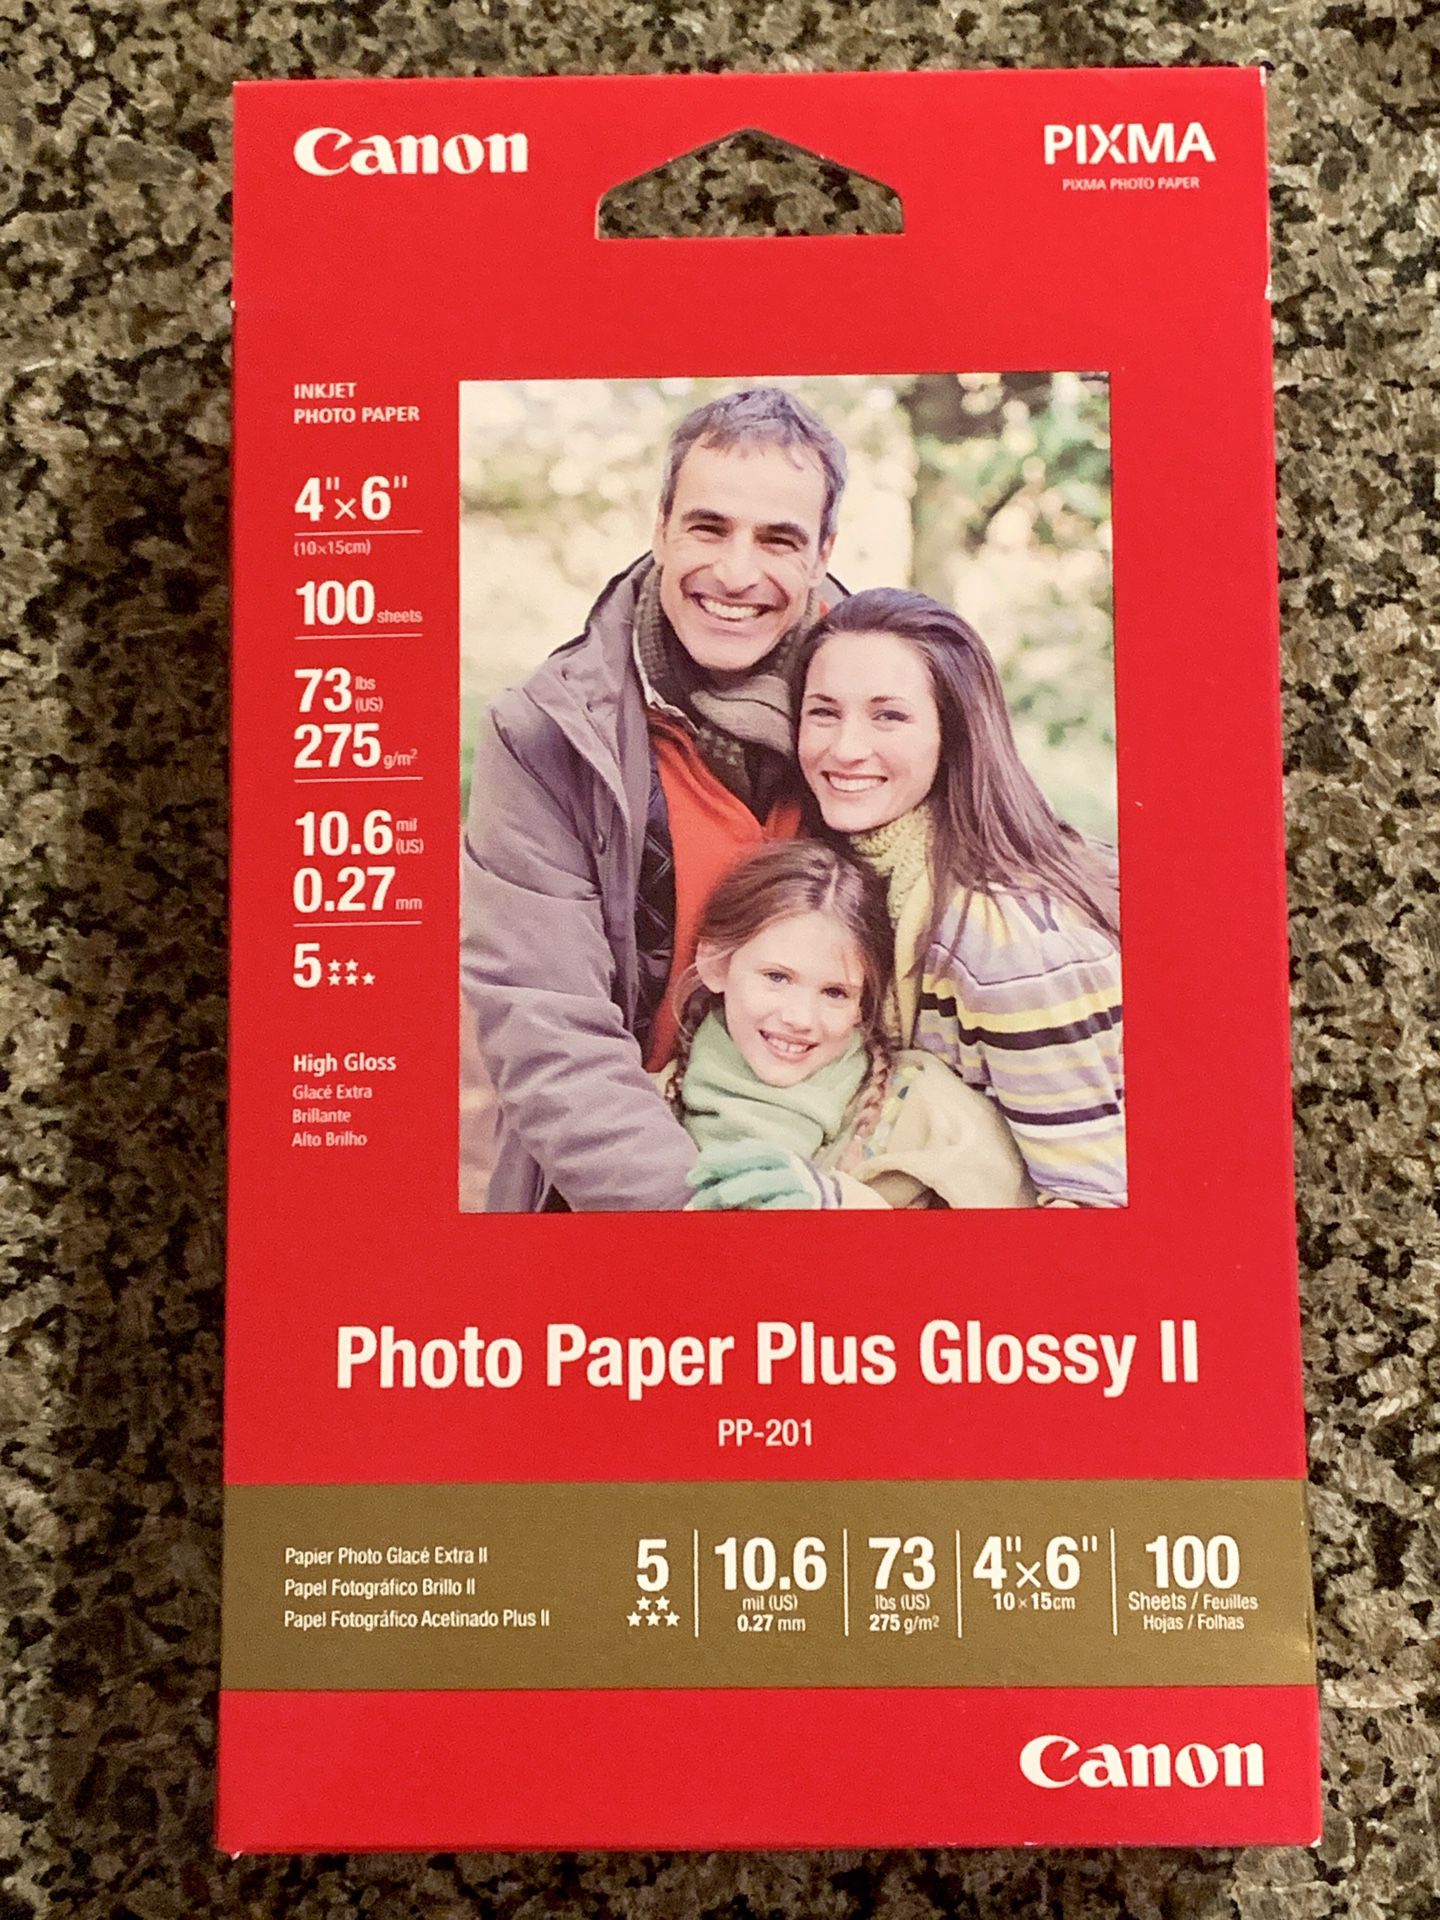 Canon photo paper plus glossy 100-4”x6”